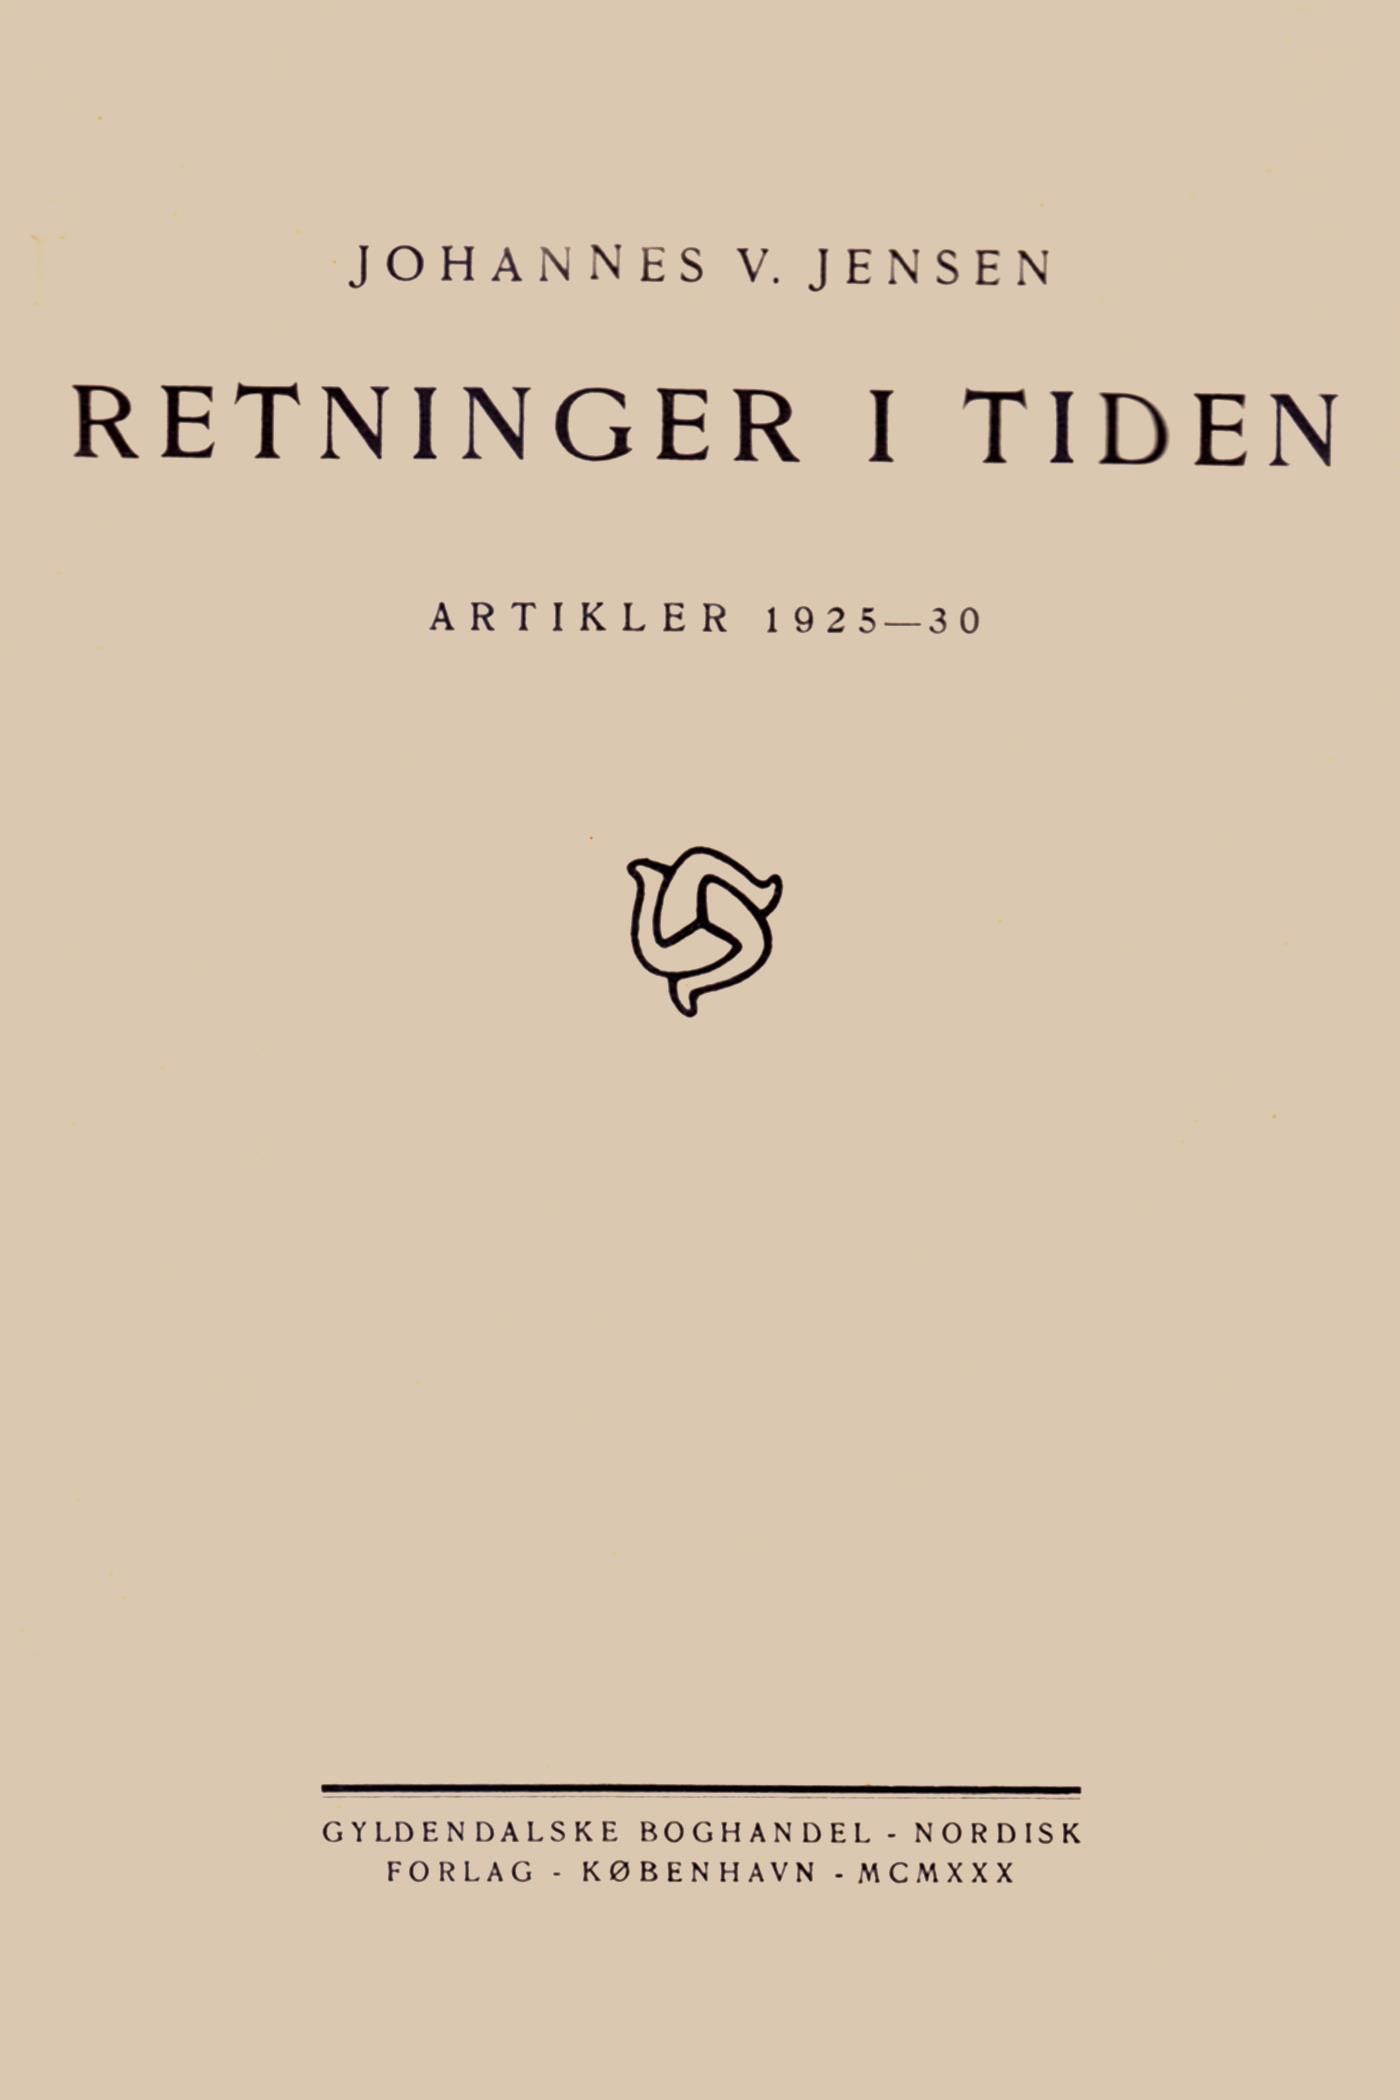 Retninger i Tiden, eBook by Johannes V. Jensen